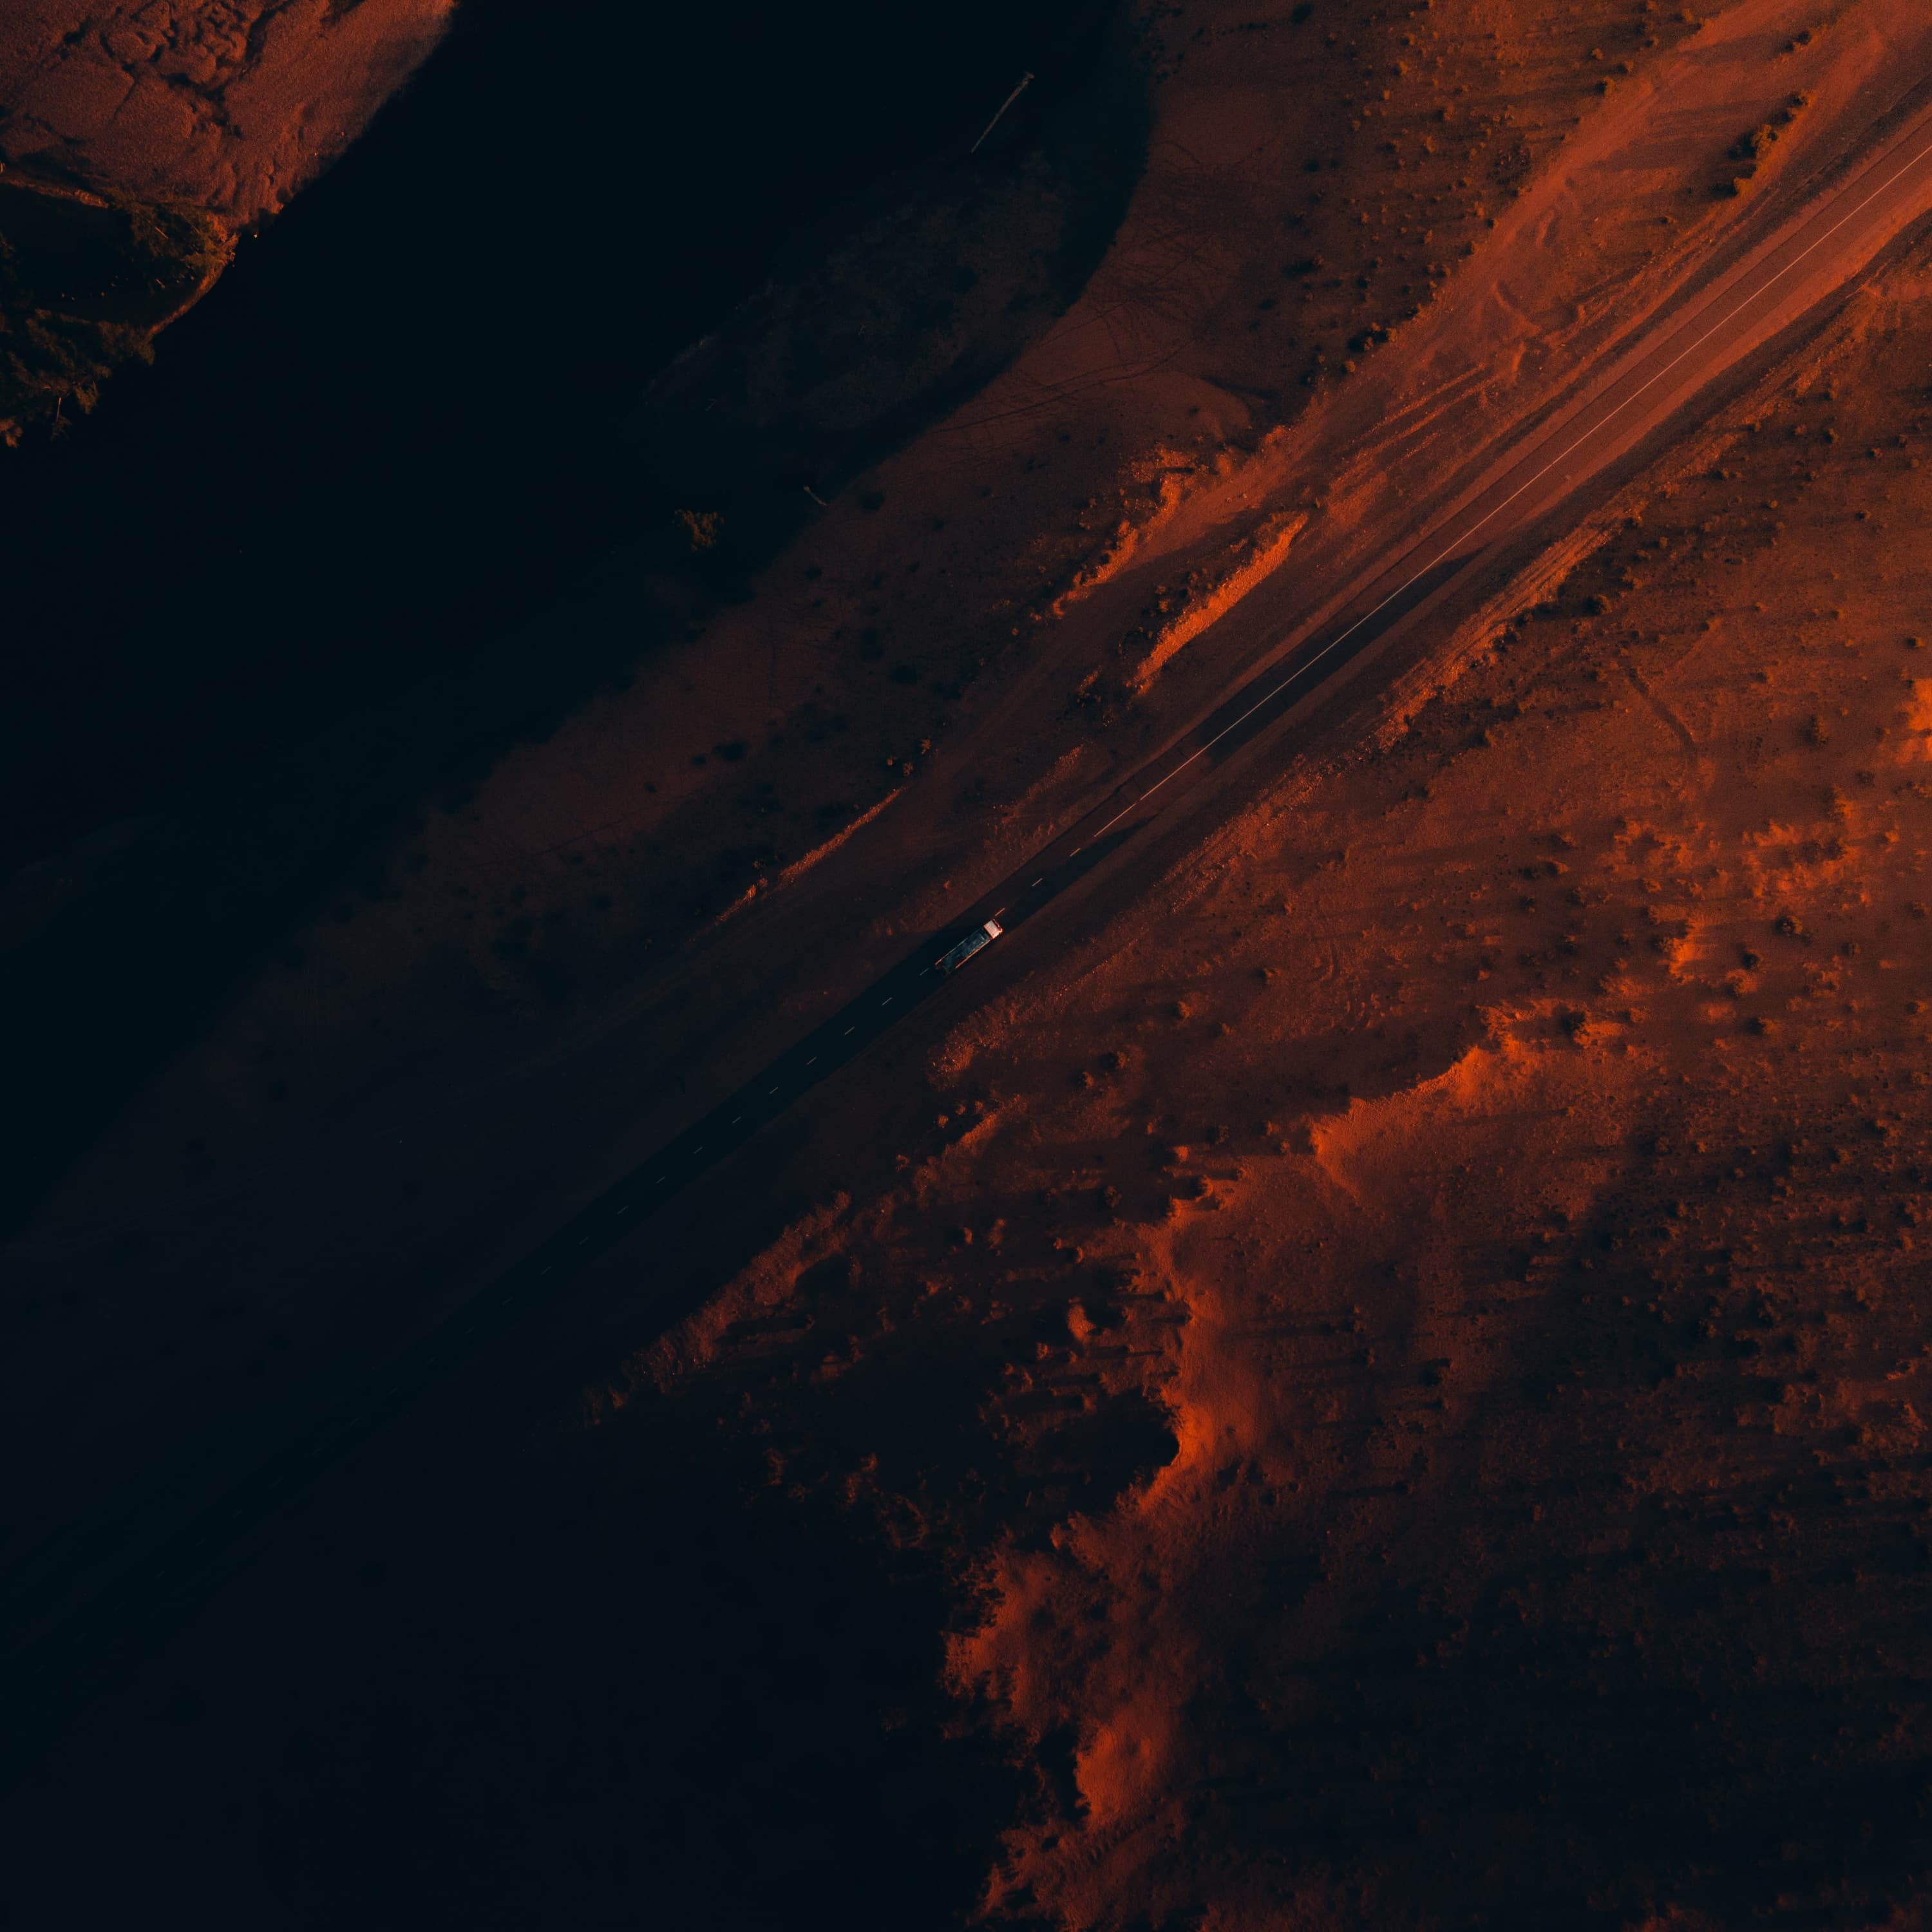 image of mars